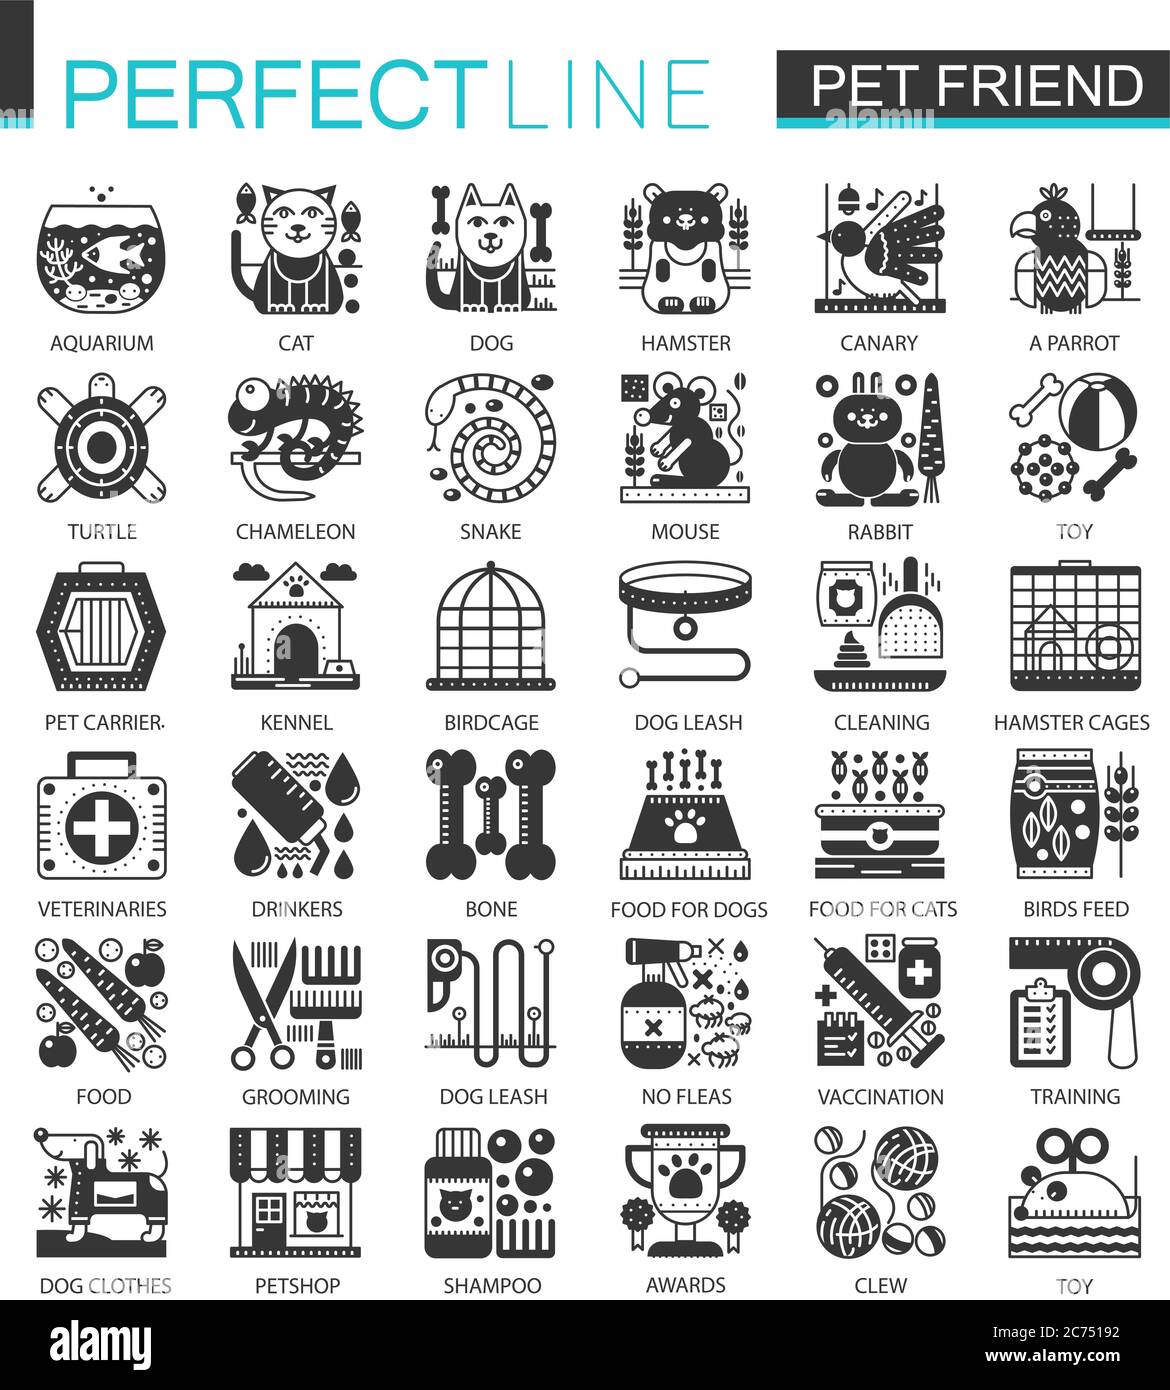 Pets friends classic black mini concept symbols. Vector pet modern icon pictogram illustrations set Stock Vector